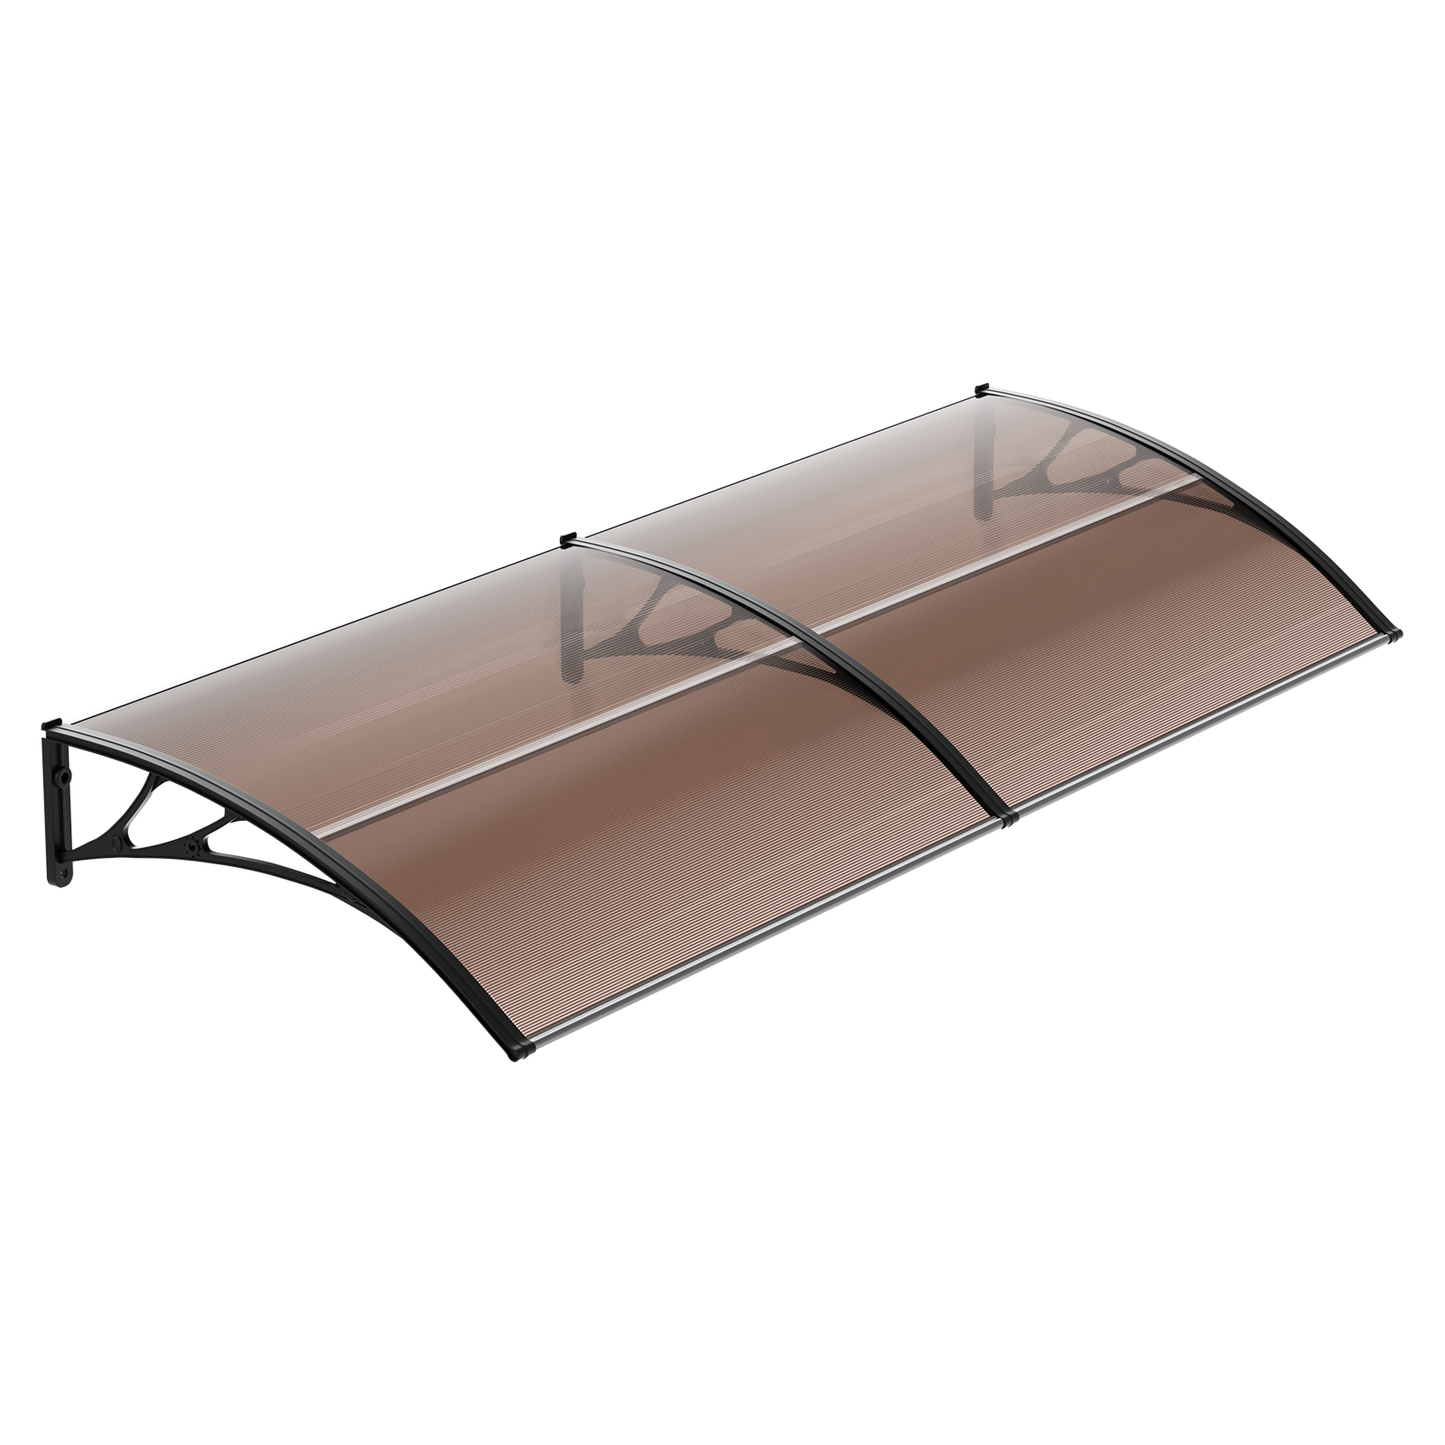 Patio Door Awning Window Rain Protection Shelter Sunshade Canopy